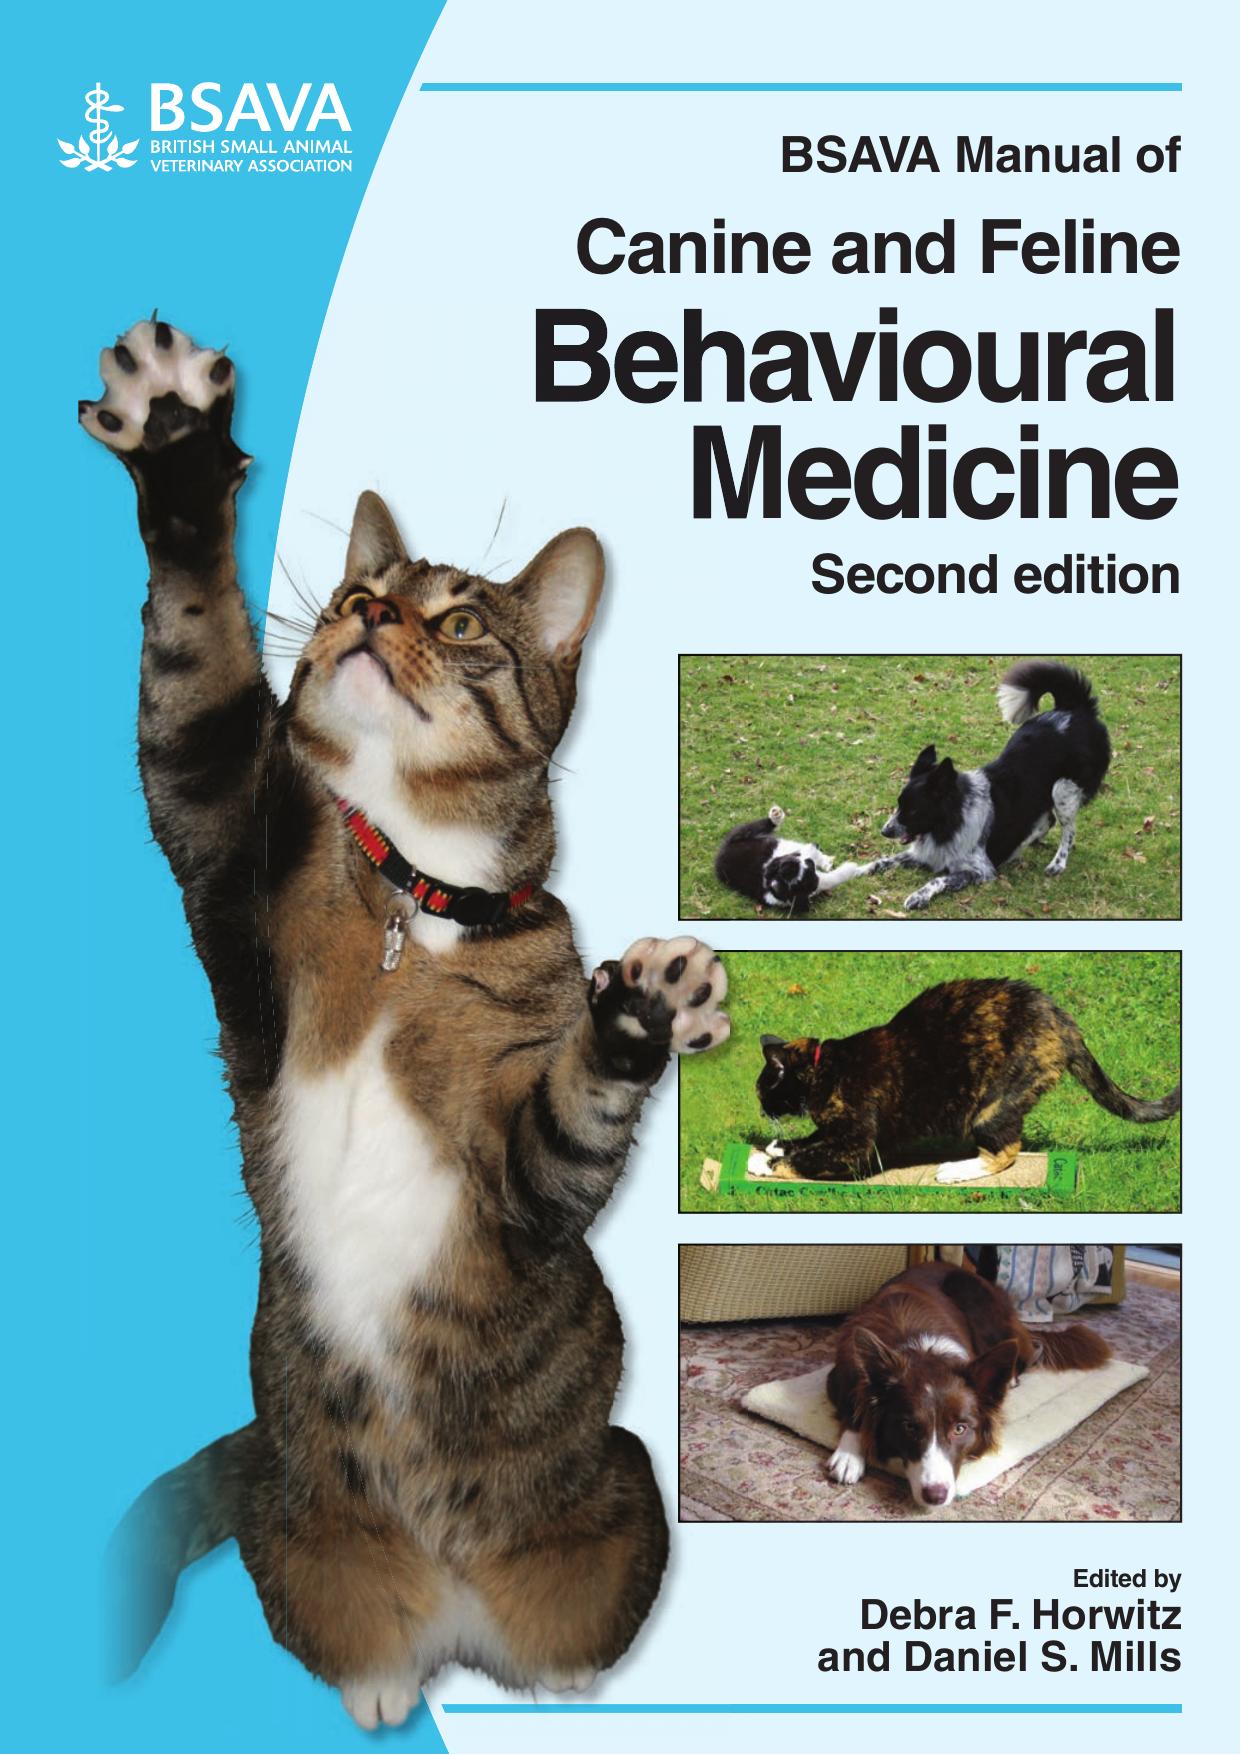 BSAVA Manual of Canine and Feline Behavioural Medicine